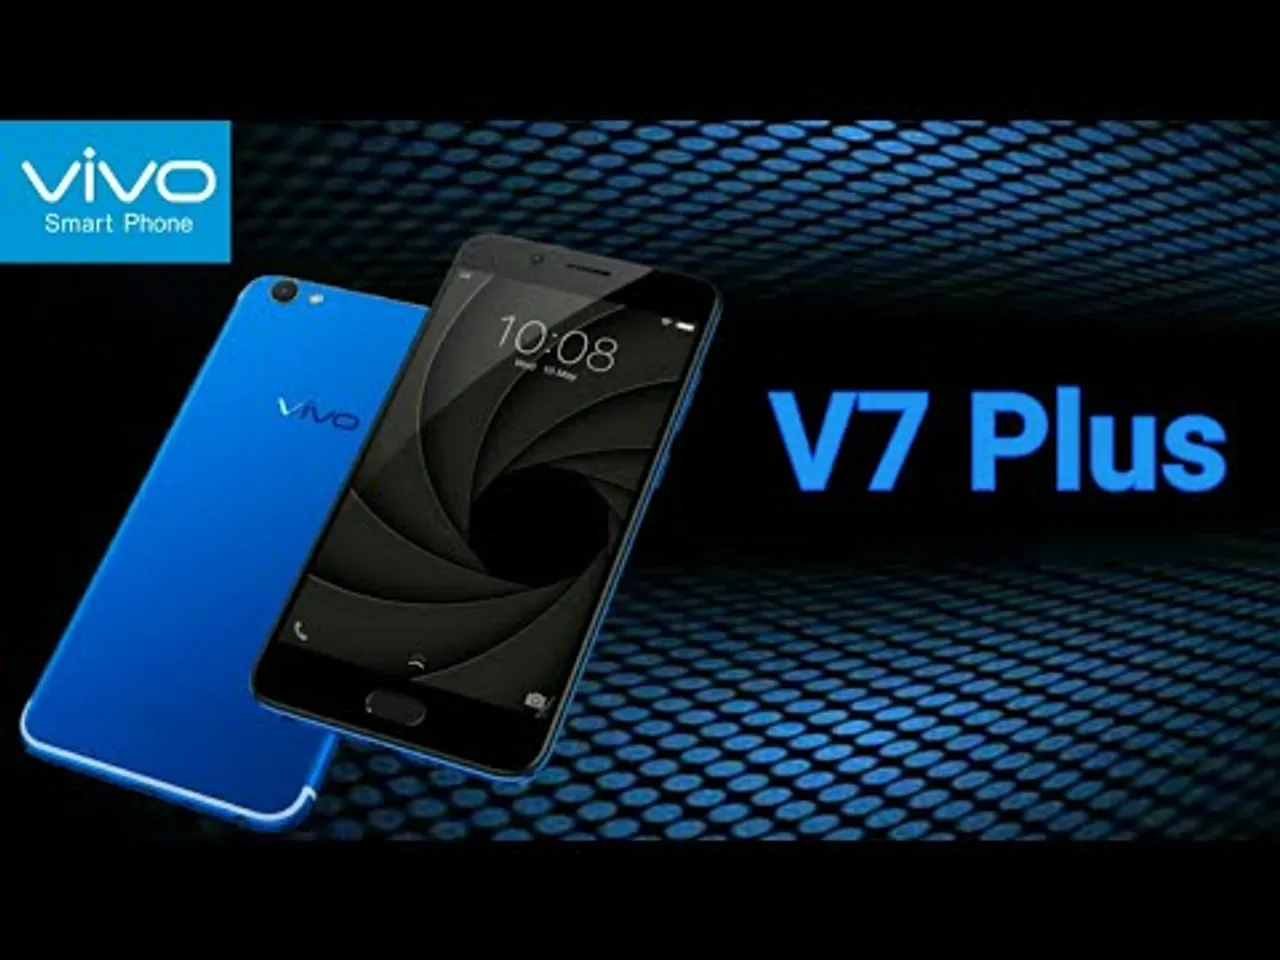 The New Smartphone Vivo V7